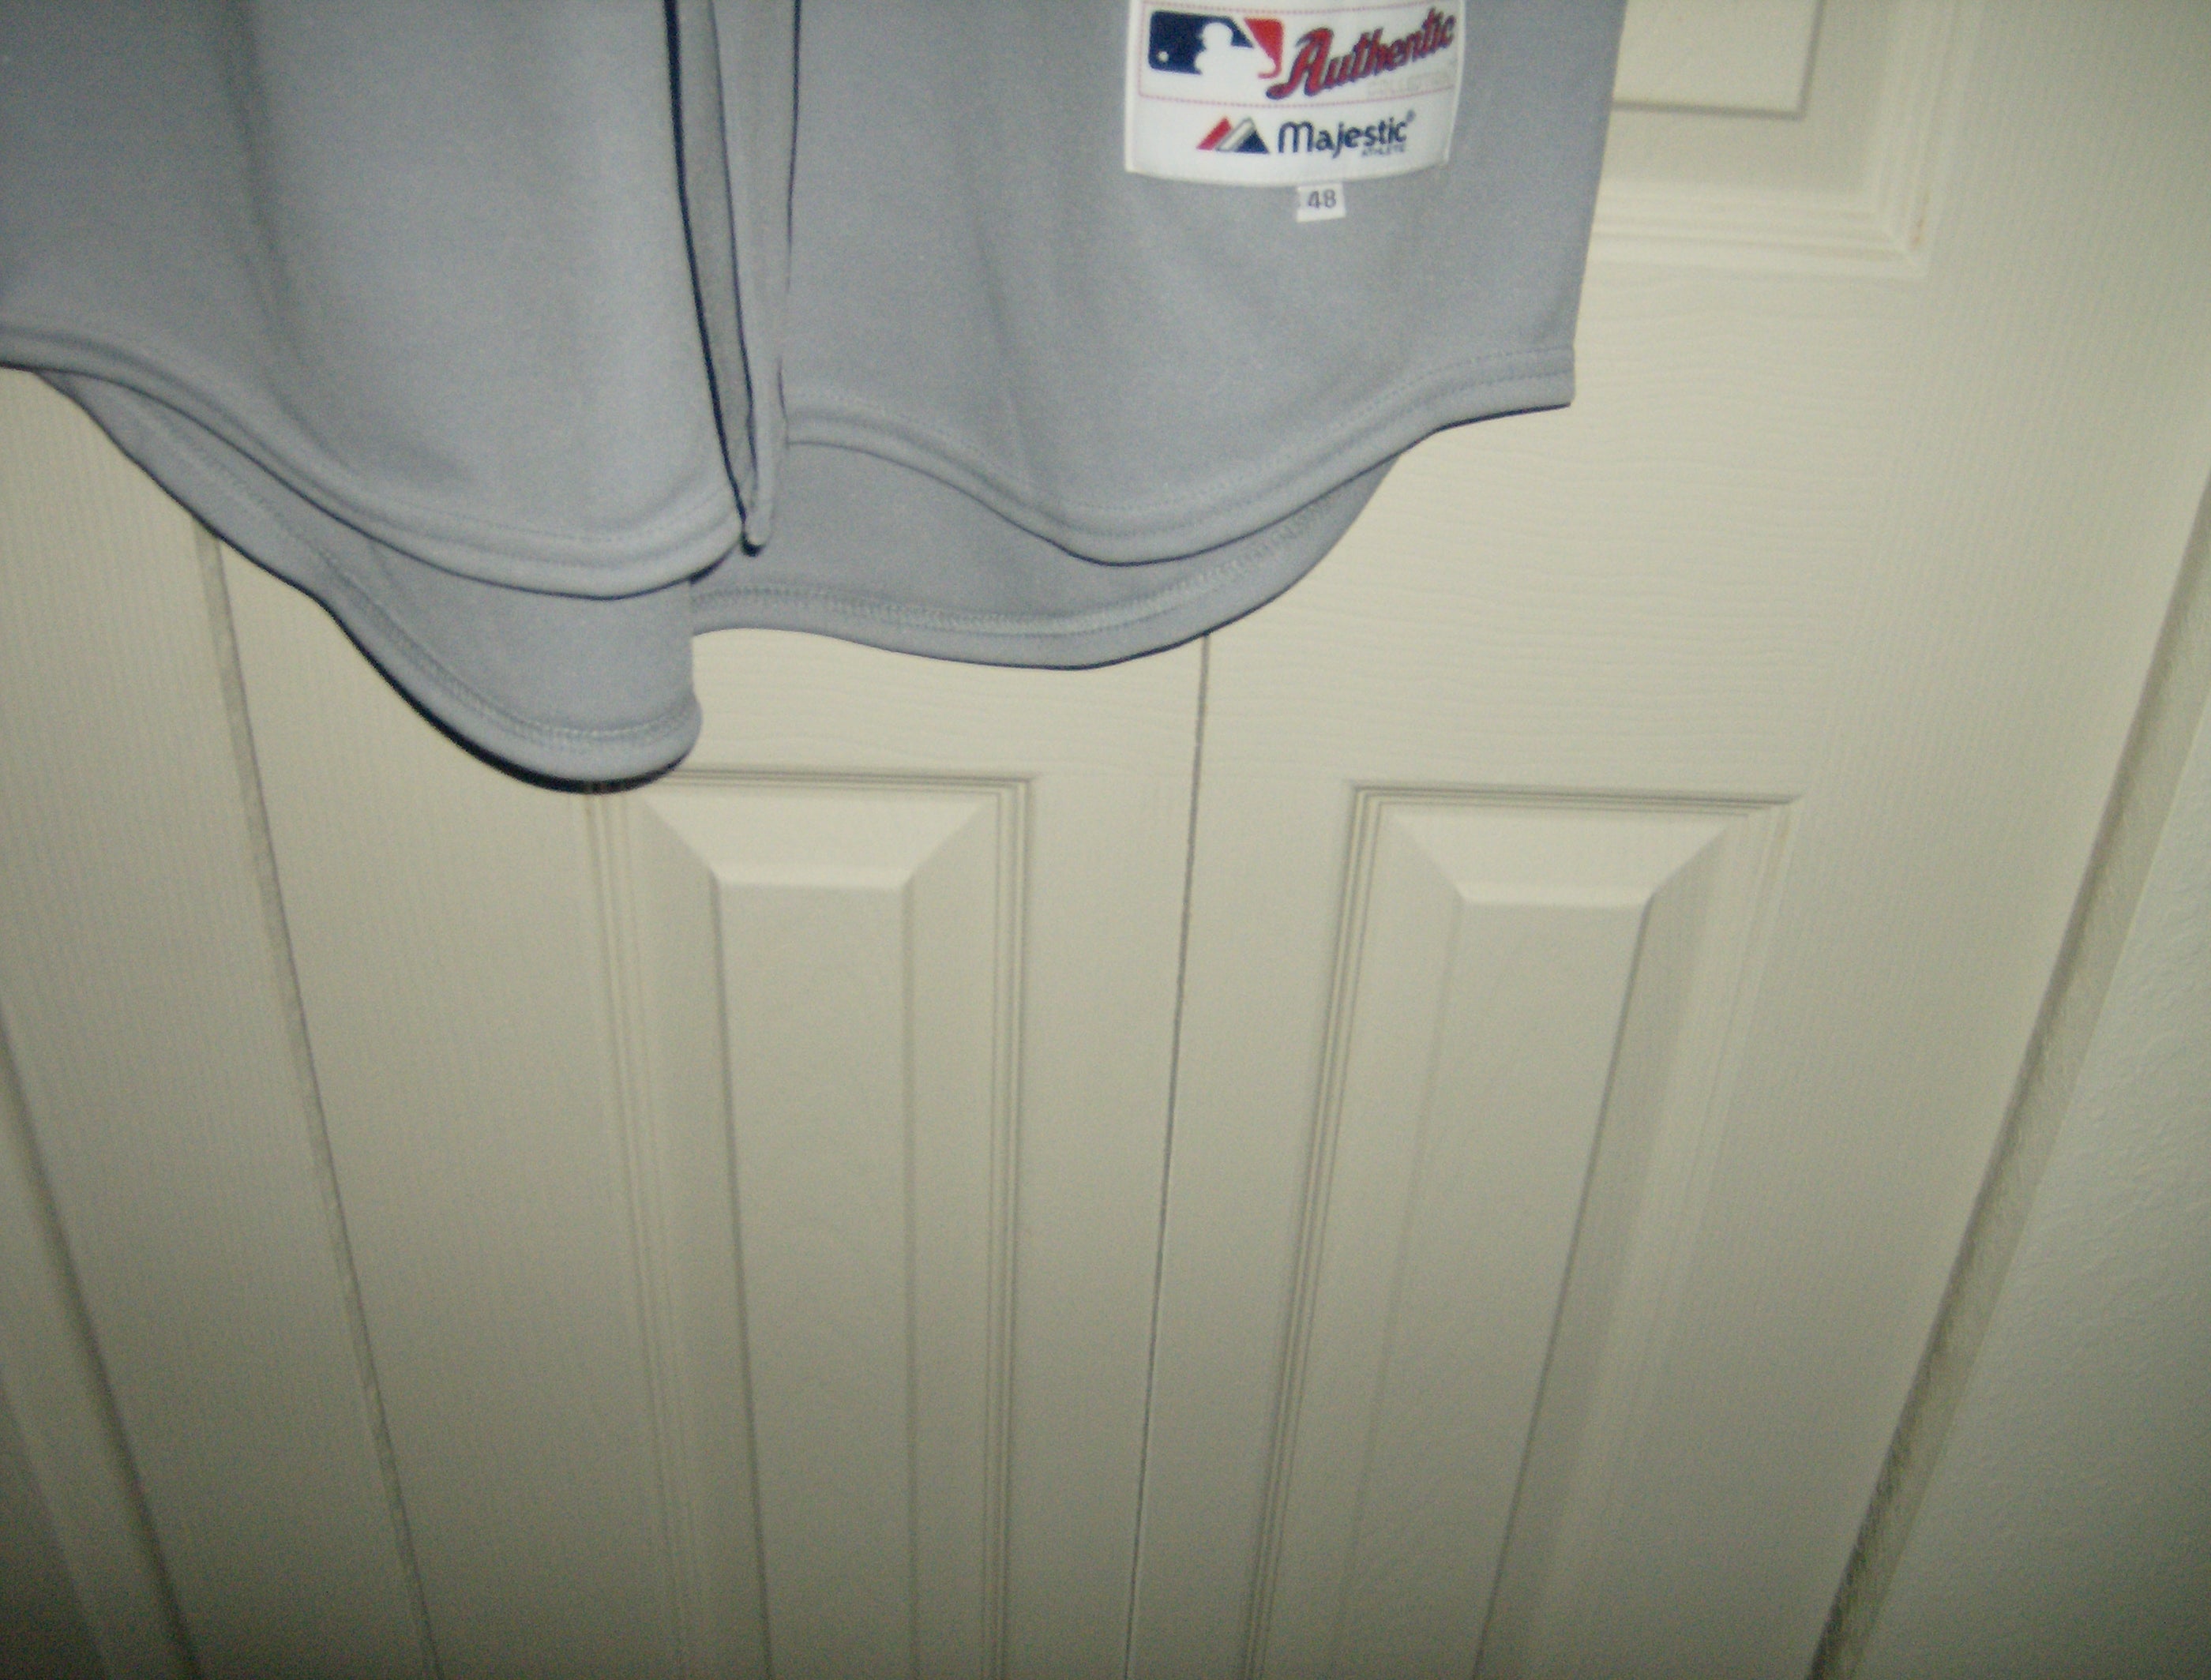 Kansas City Royals Under Armour Polo T Shirt Size - Depop